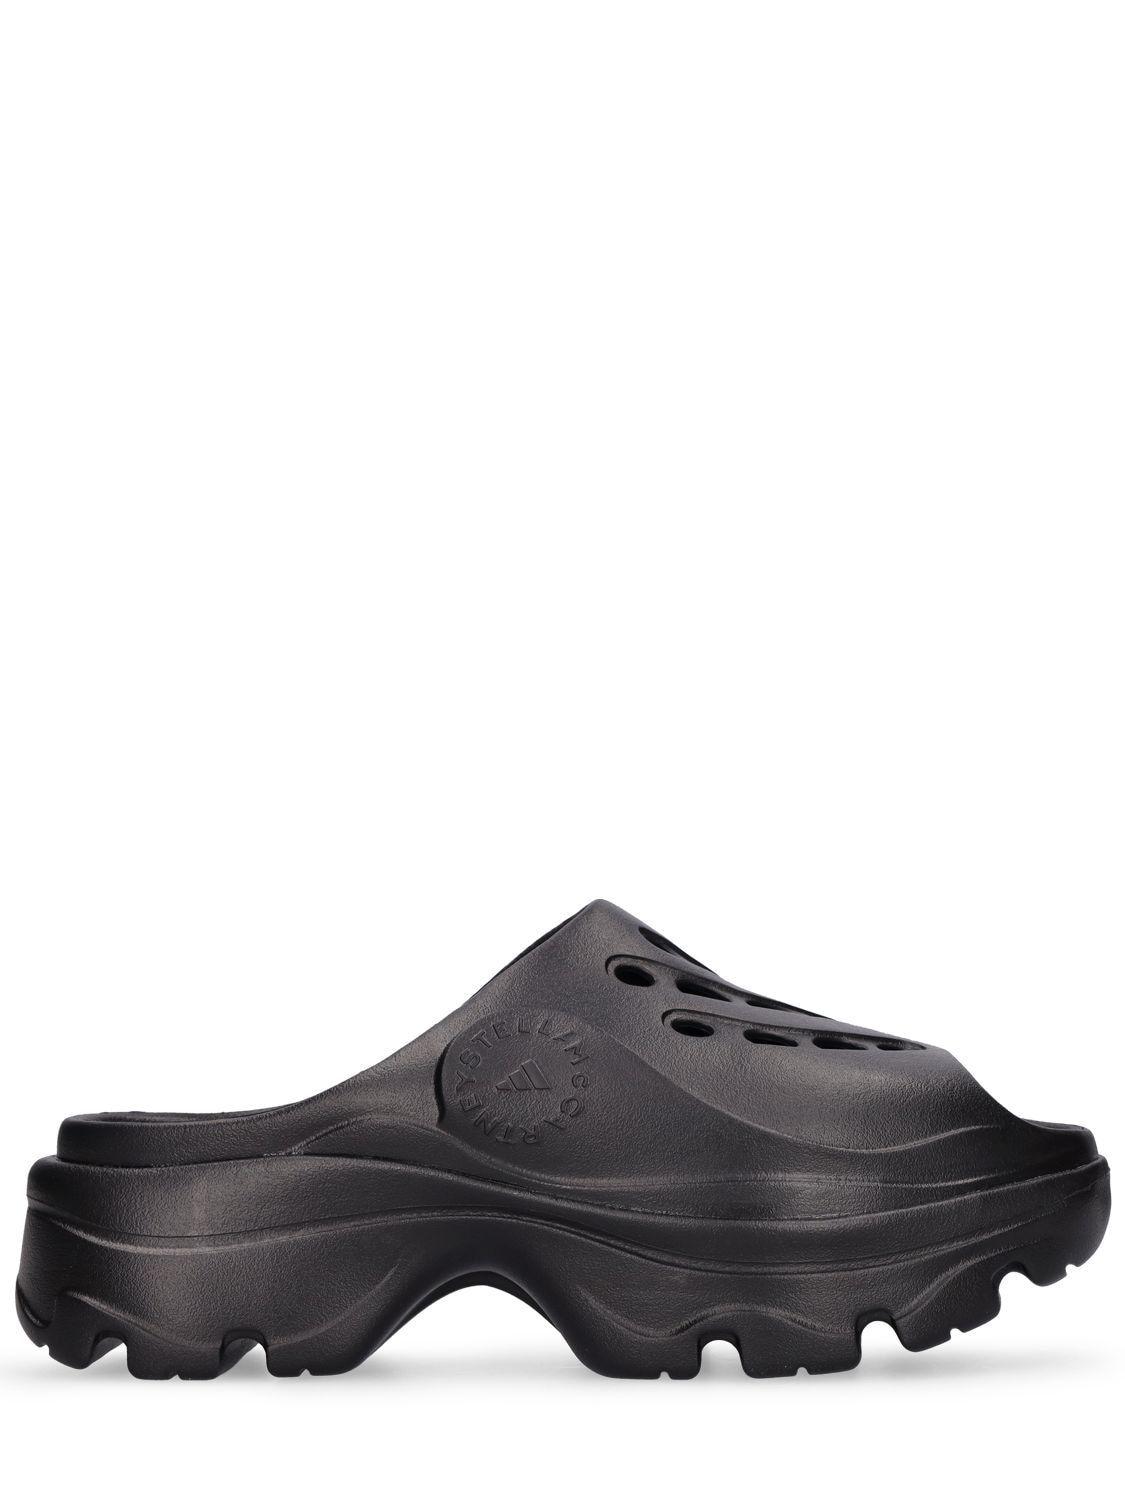 adidas By Stella McCartney Asmc Platform Slide Sandals in Gray | Lyst